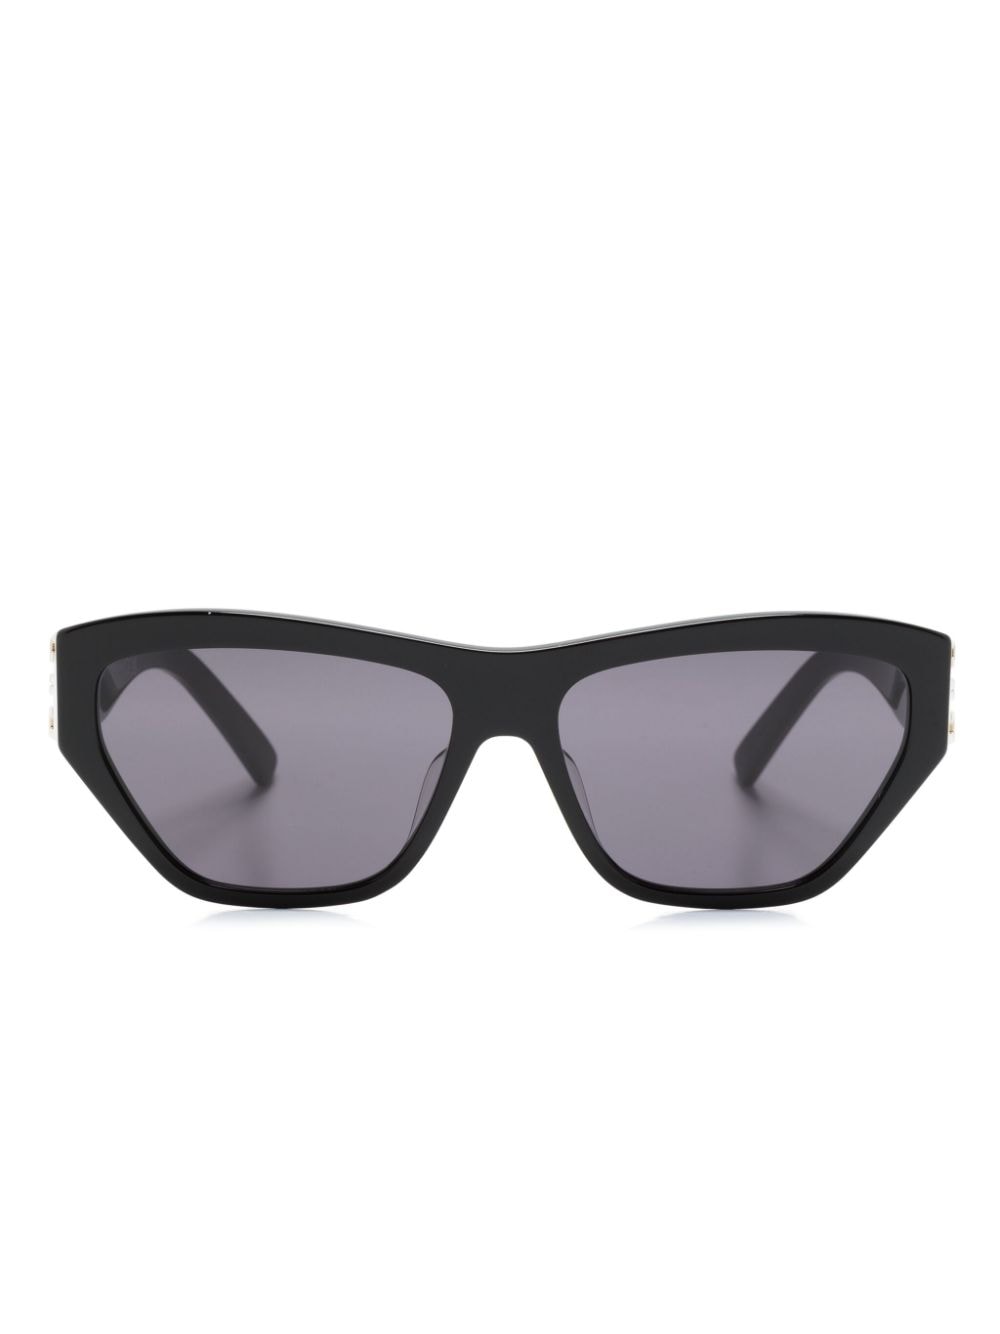 Givenchy 4g 猫眼框太阳眼镜 In Black